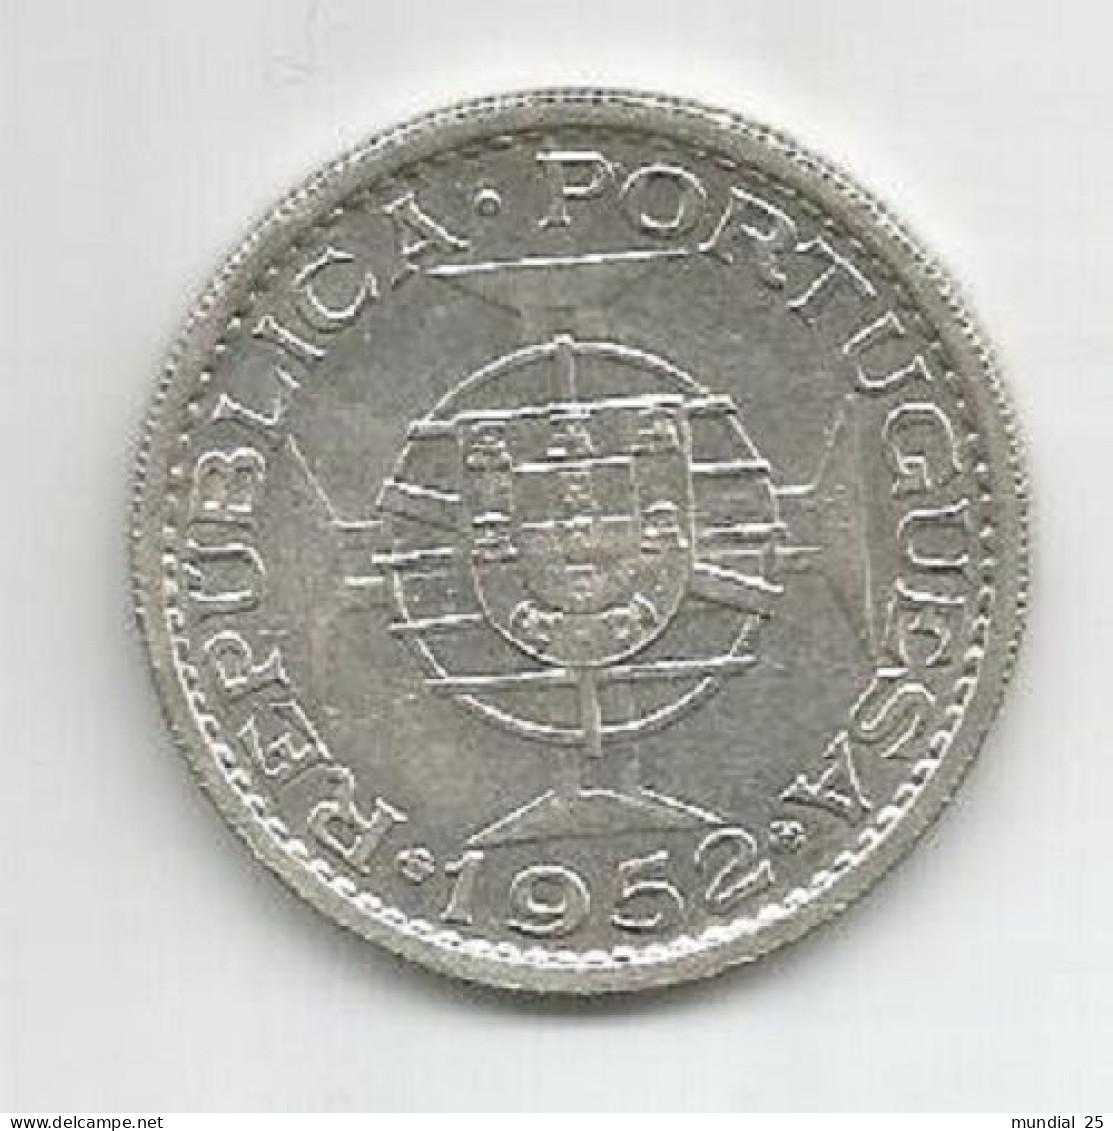 GUINEA-BISSAU PORTUGAL 20$00 ESCUDOS 1952 SILVER - Guinea Bissau